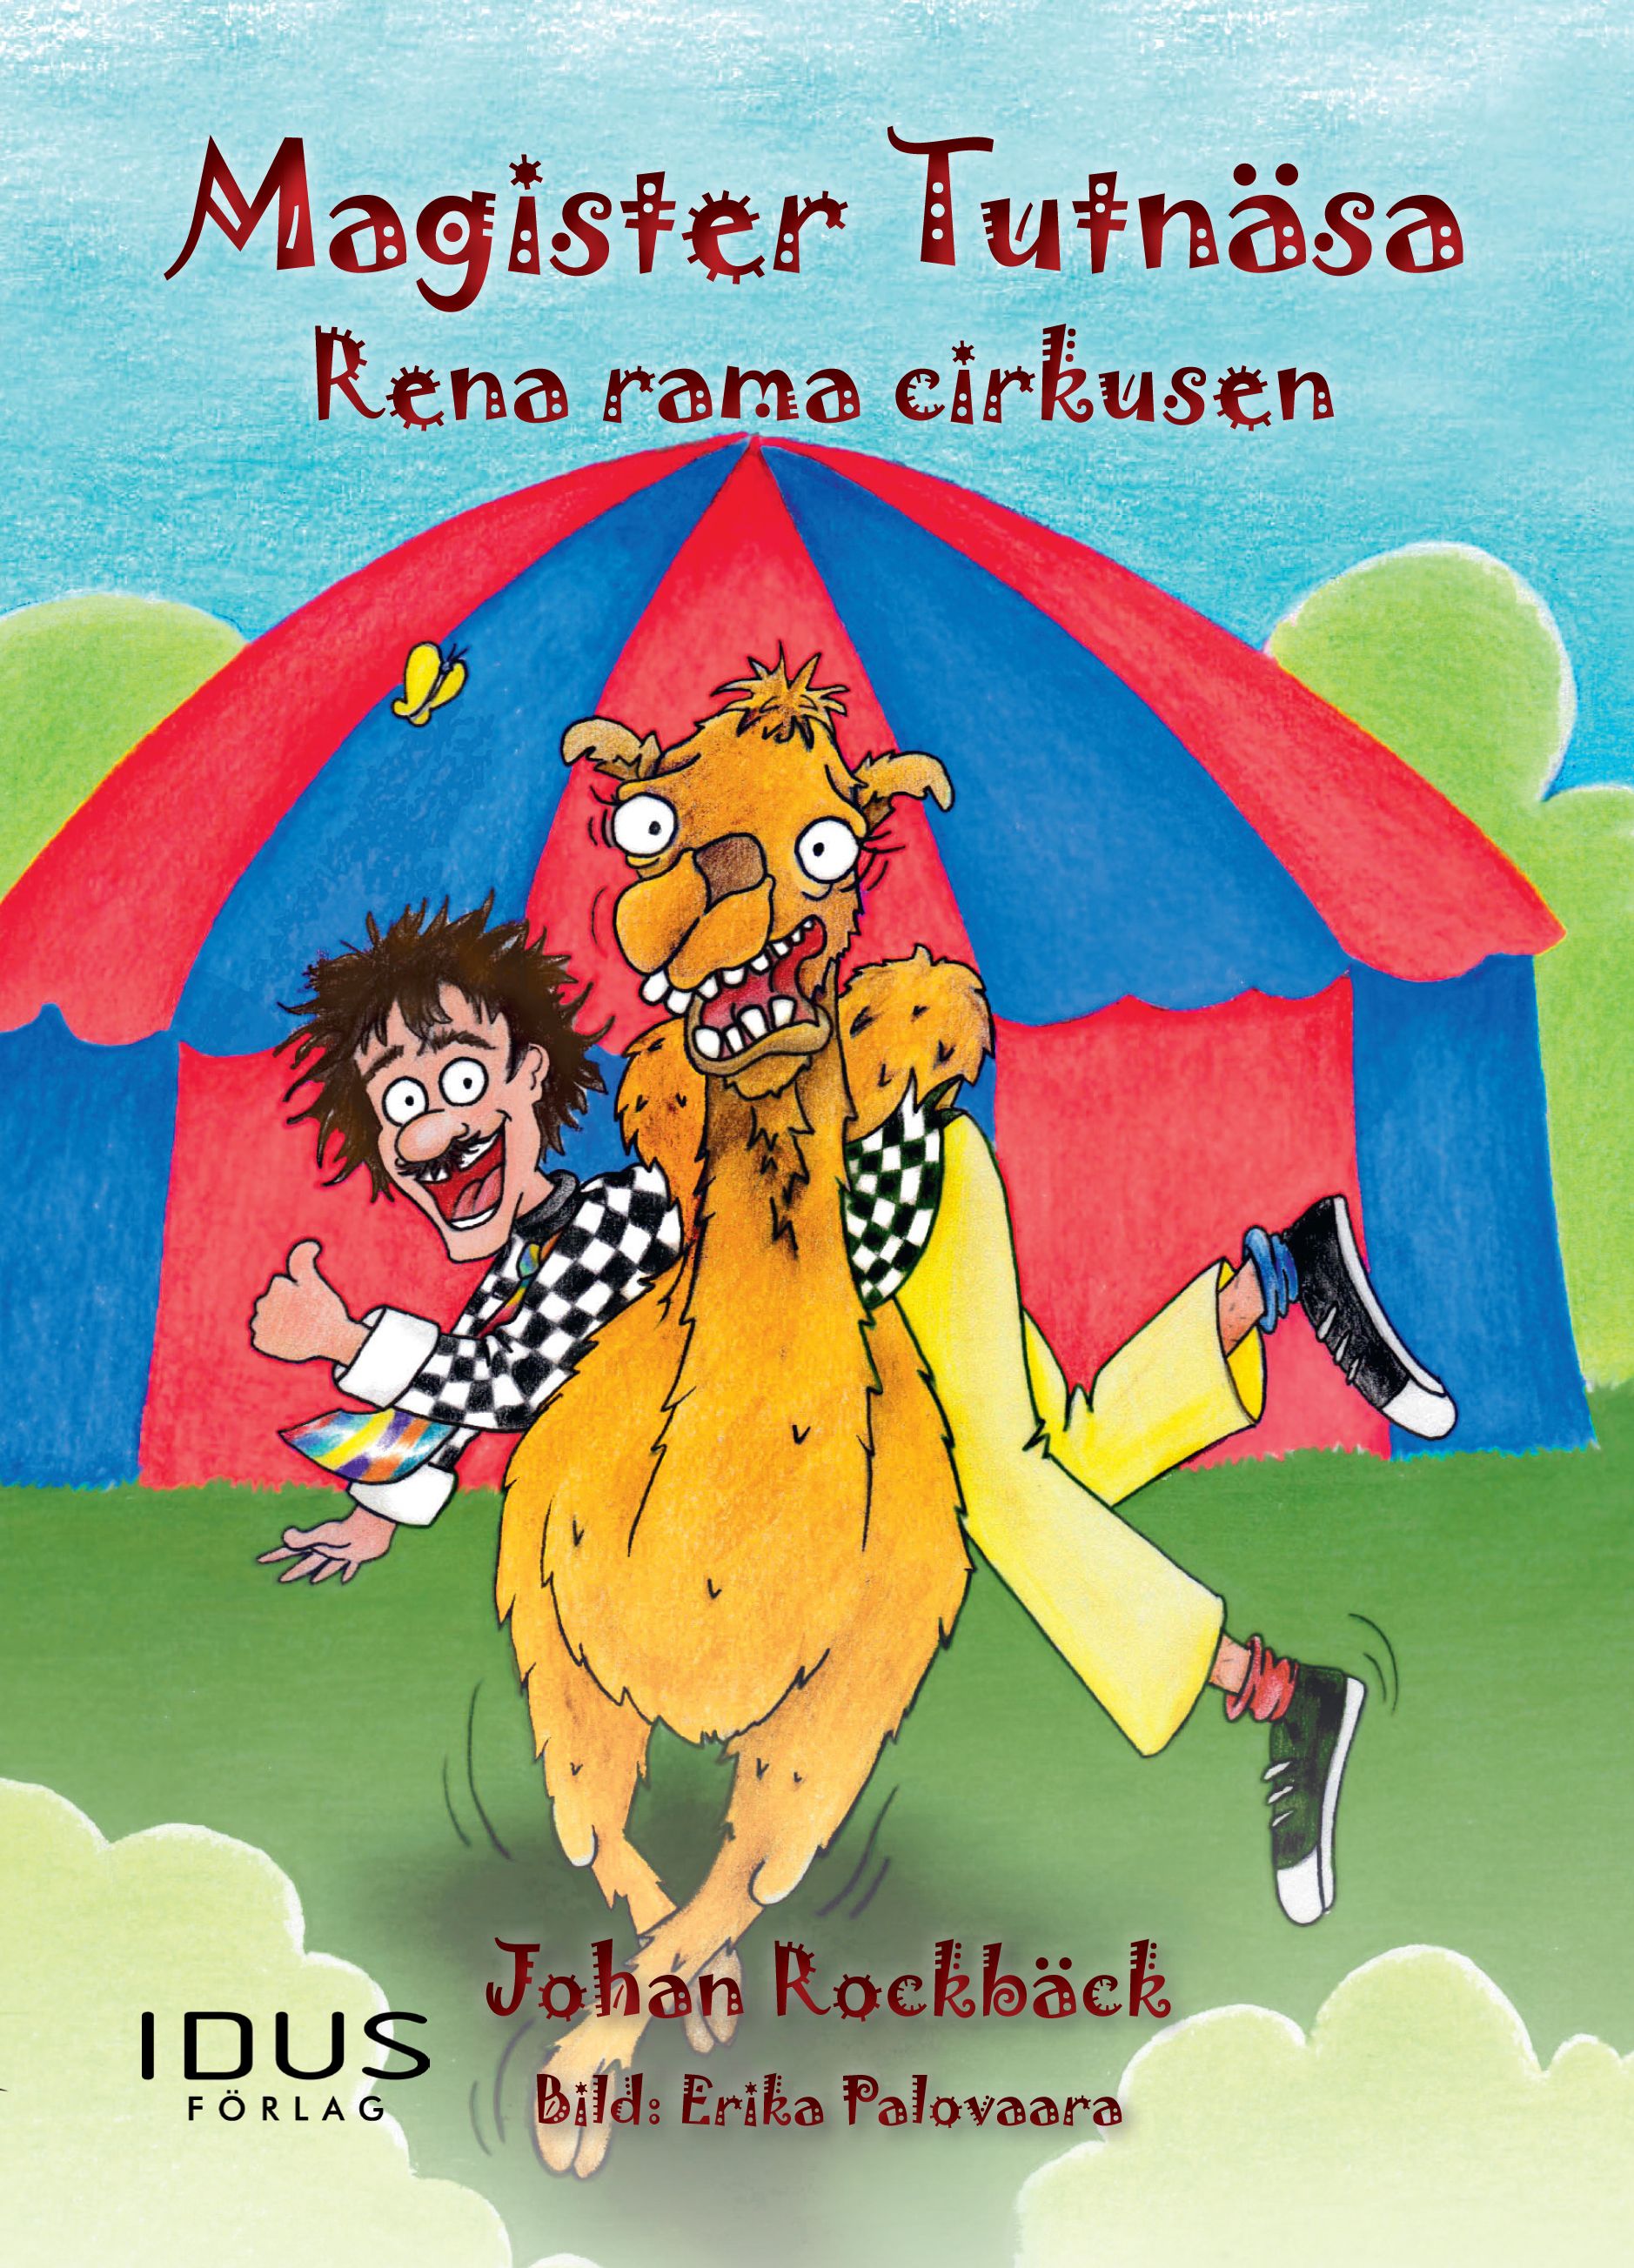 Magister Tutnäsa - Rena rama cirkusen, audiobook by Johan Rockbäck